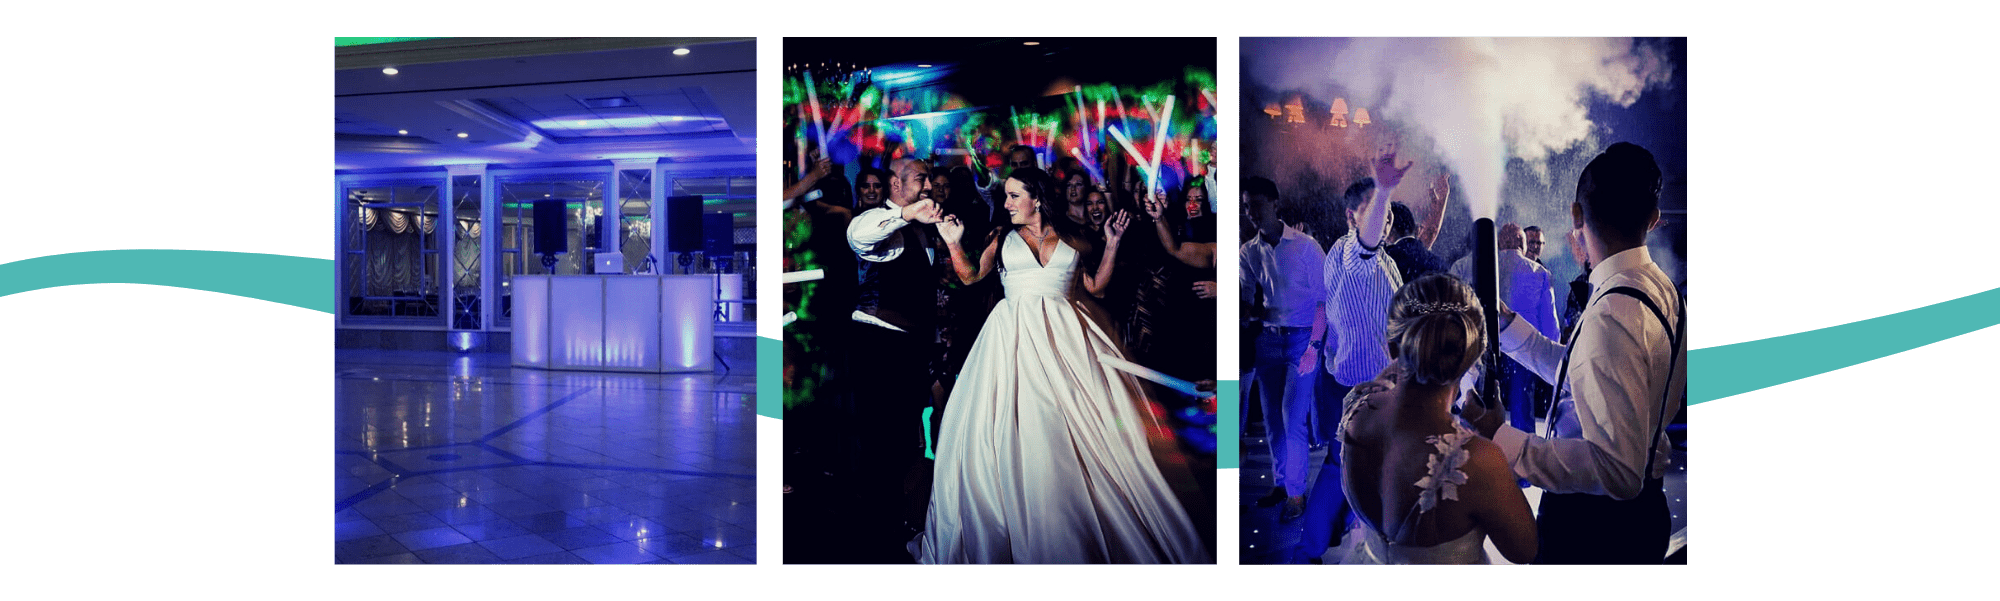 wedding DJ service collage 